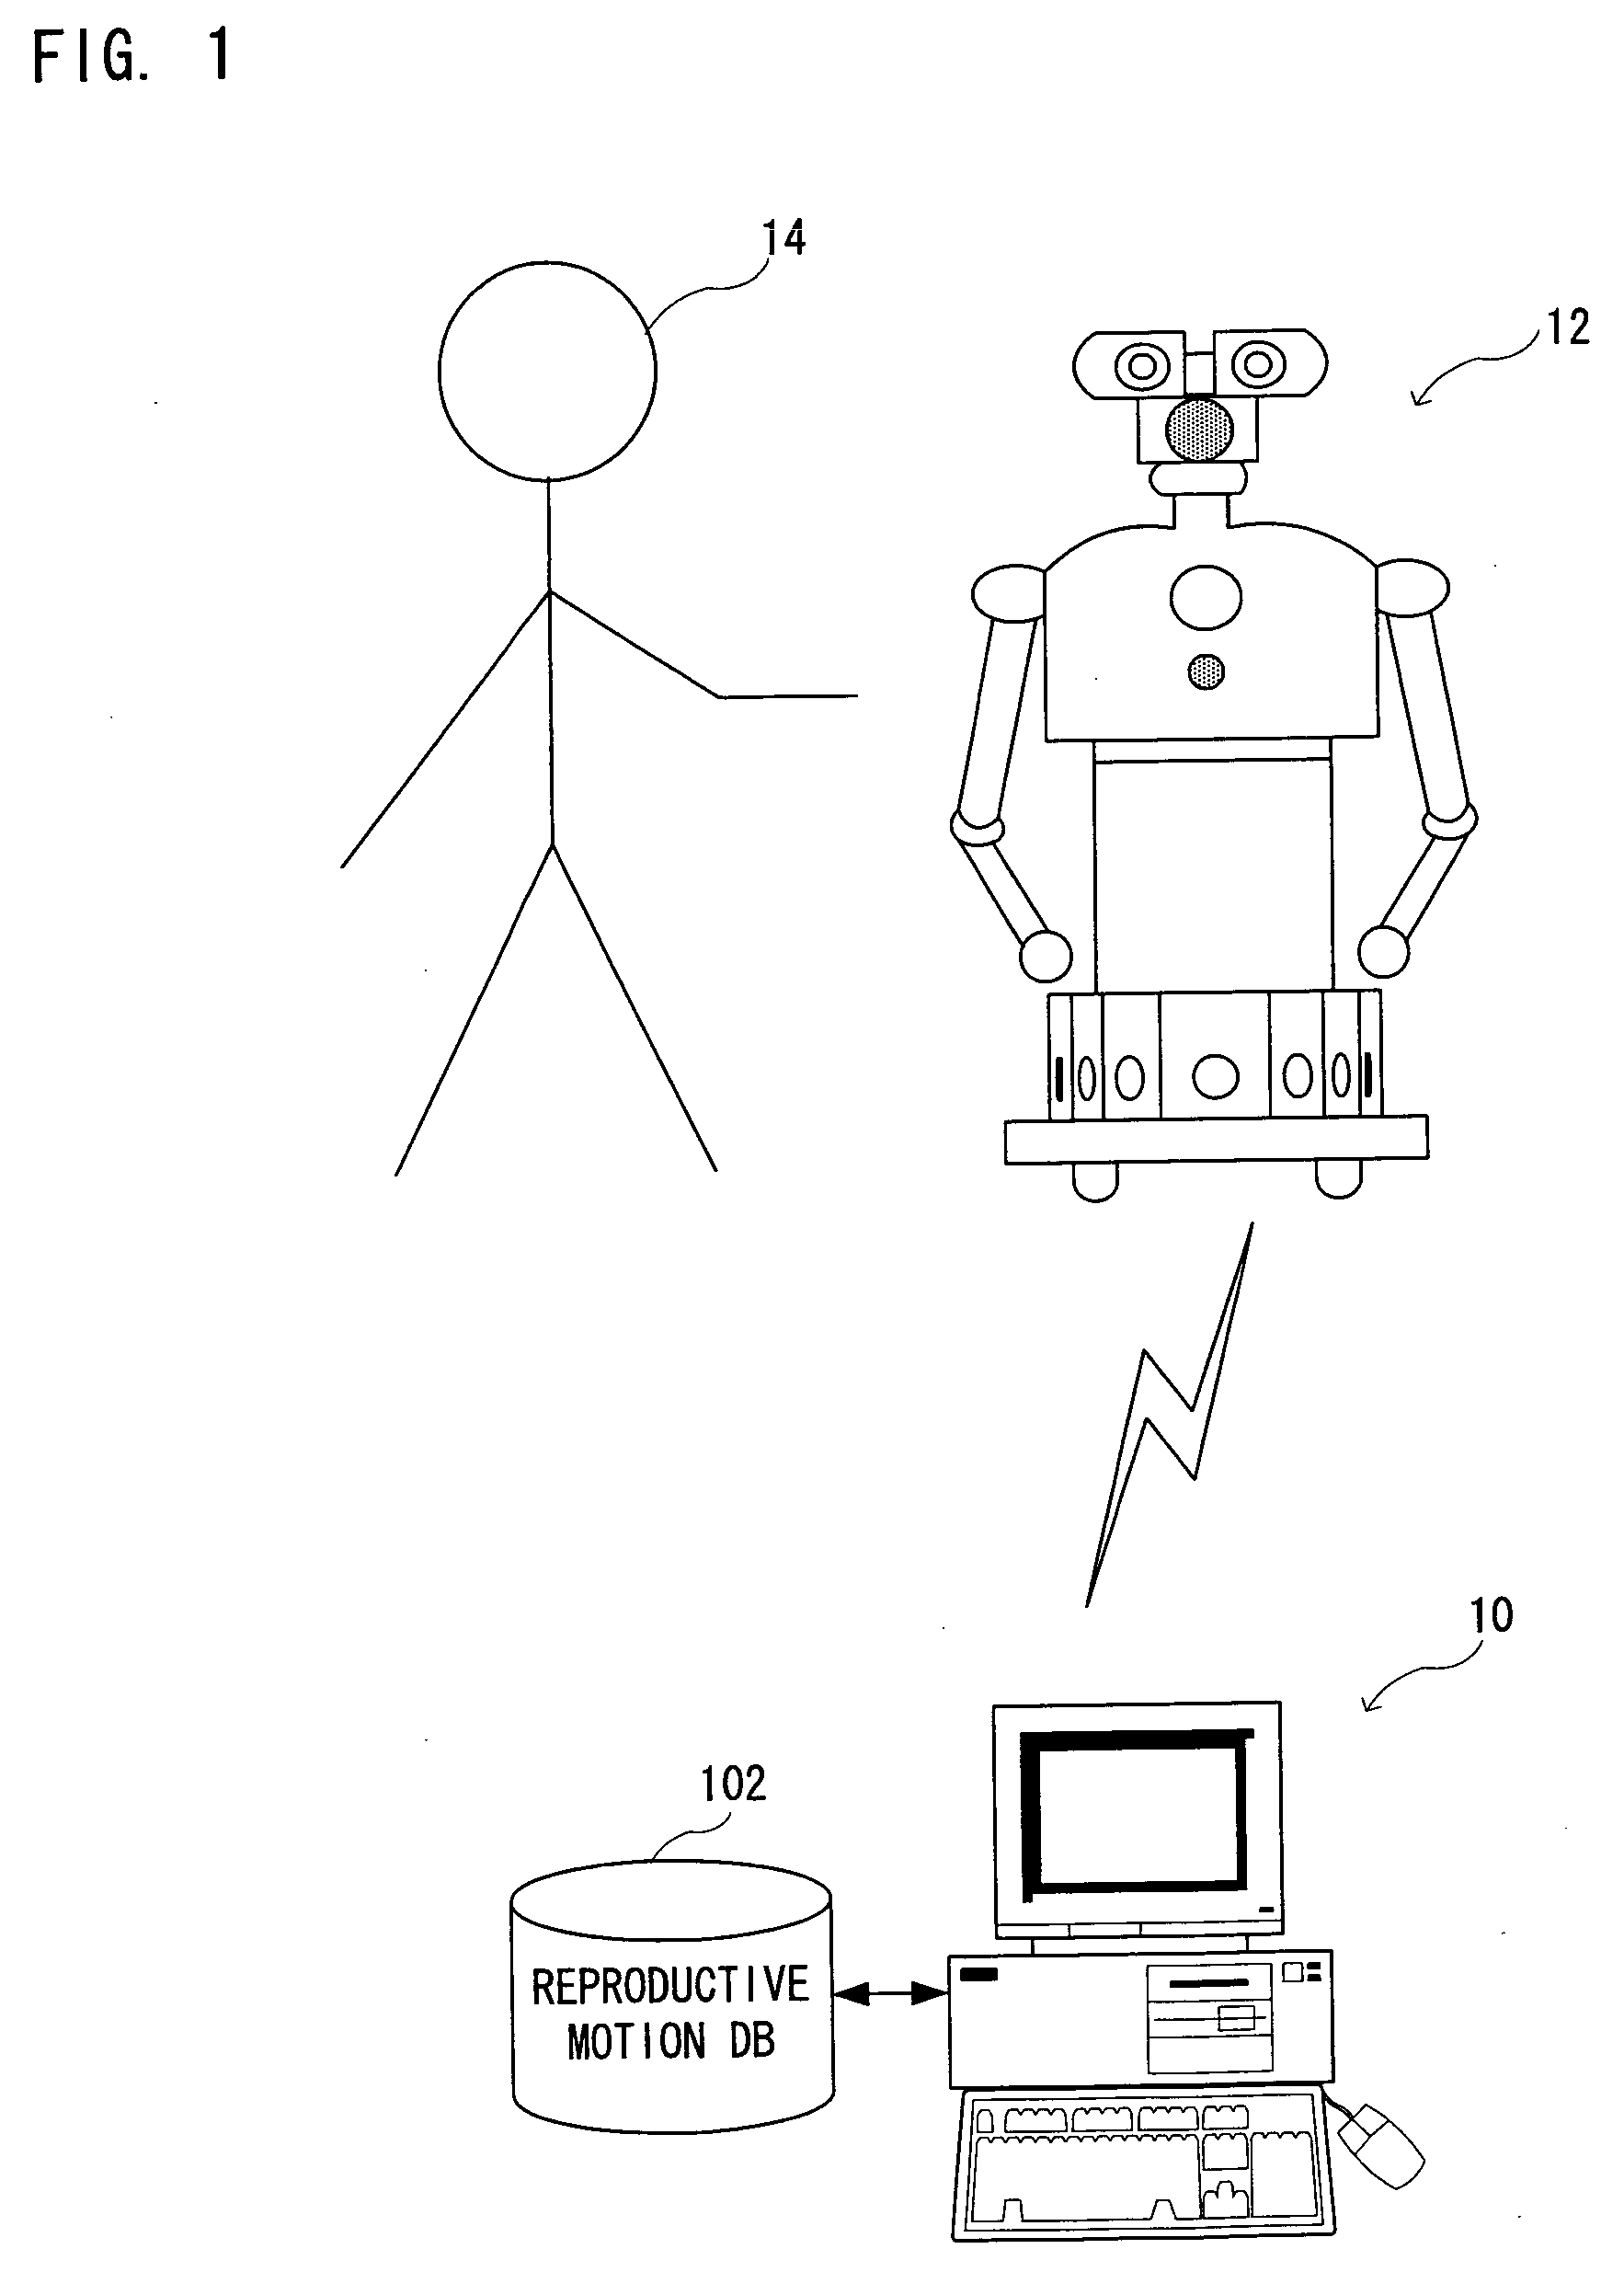 Communication robot control system